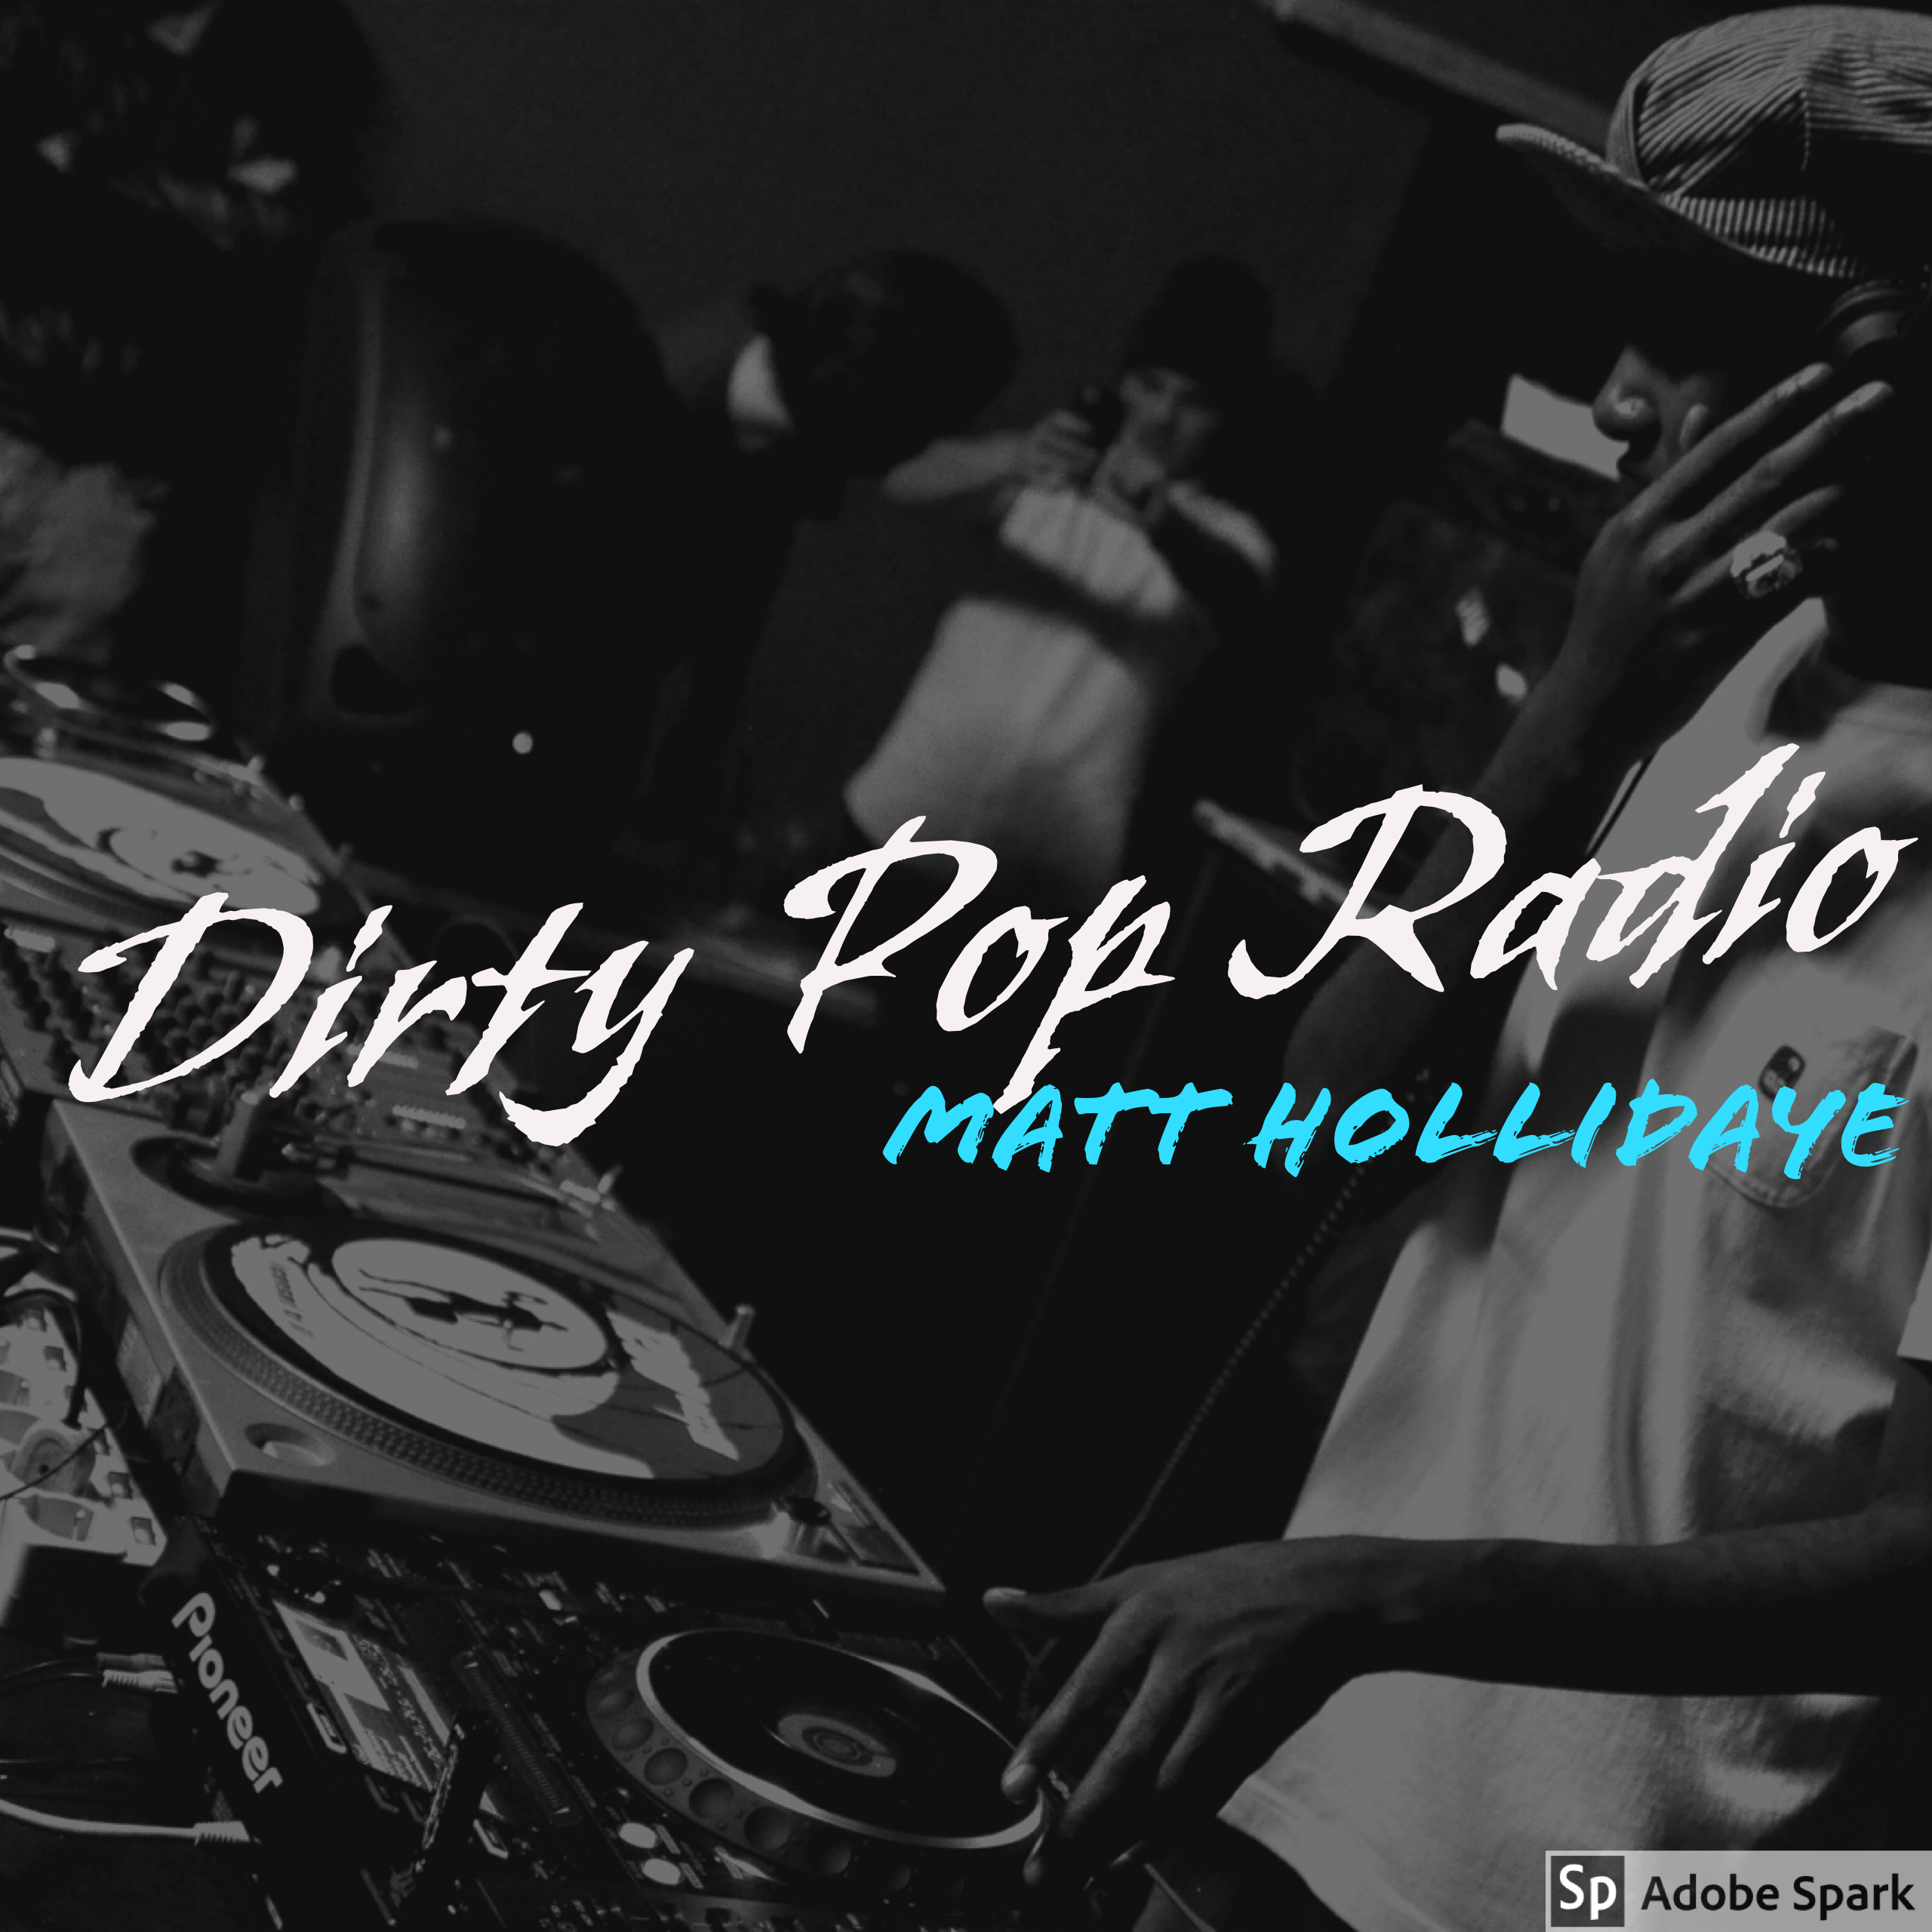 Dirty Pop Radio